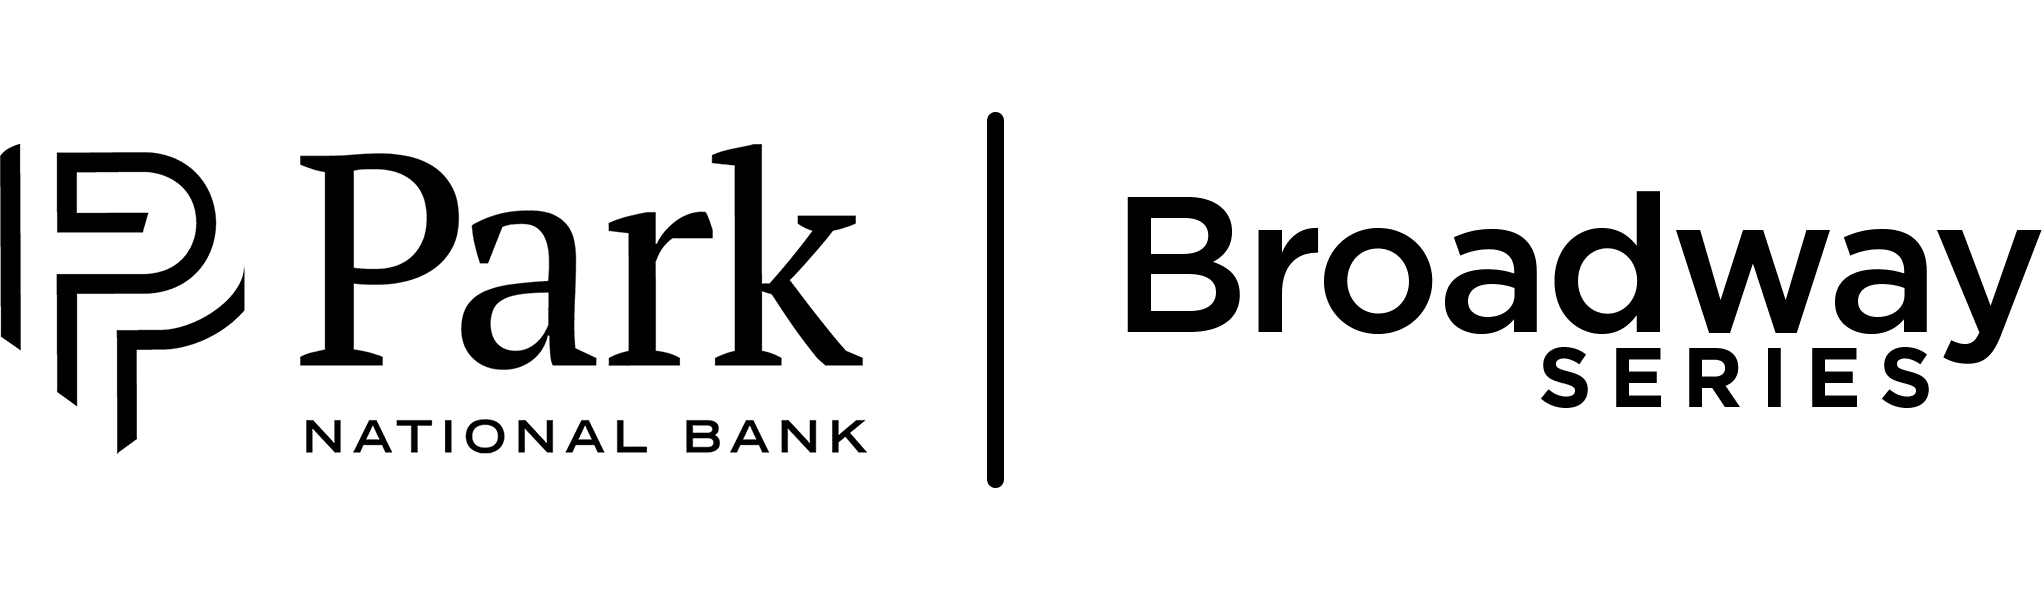 Park National Bank Broadway Series